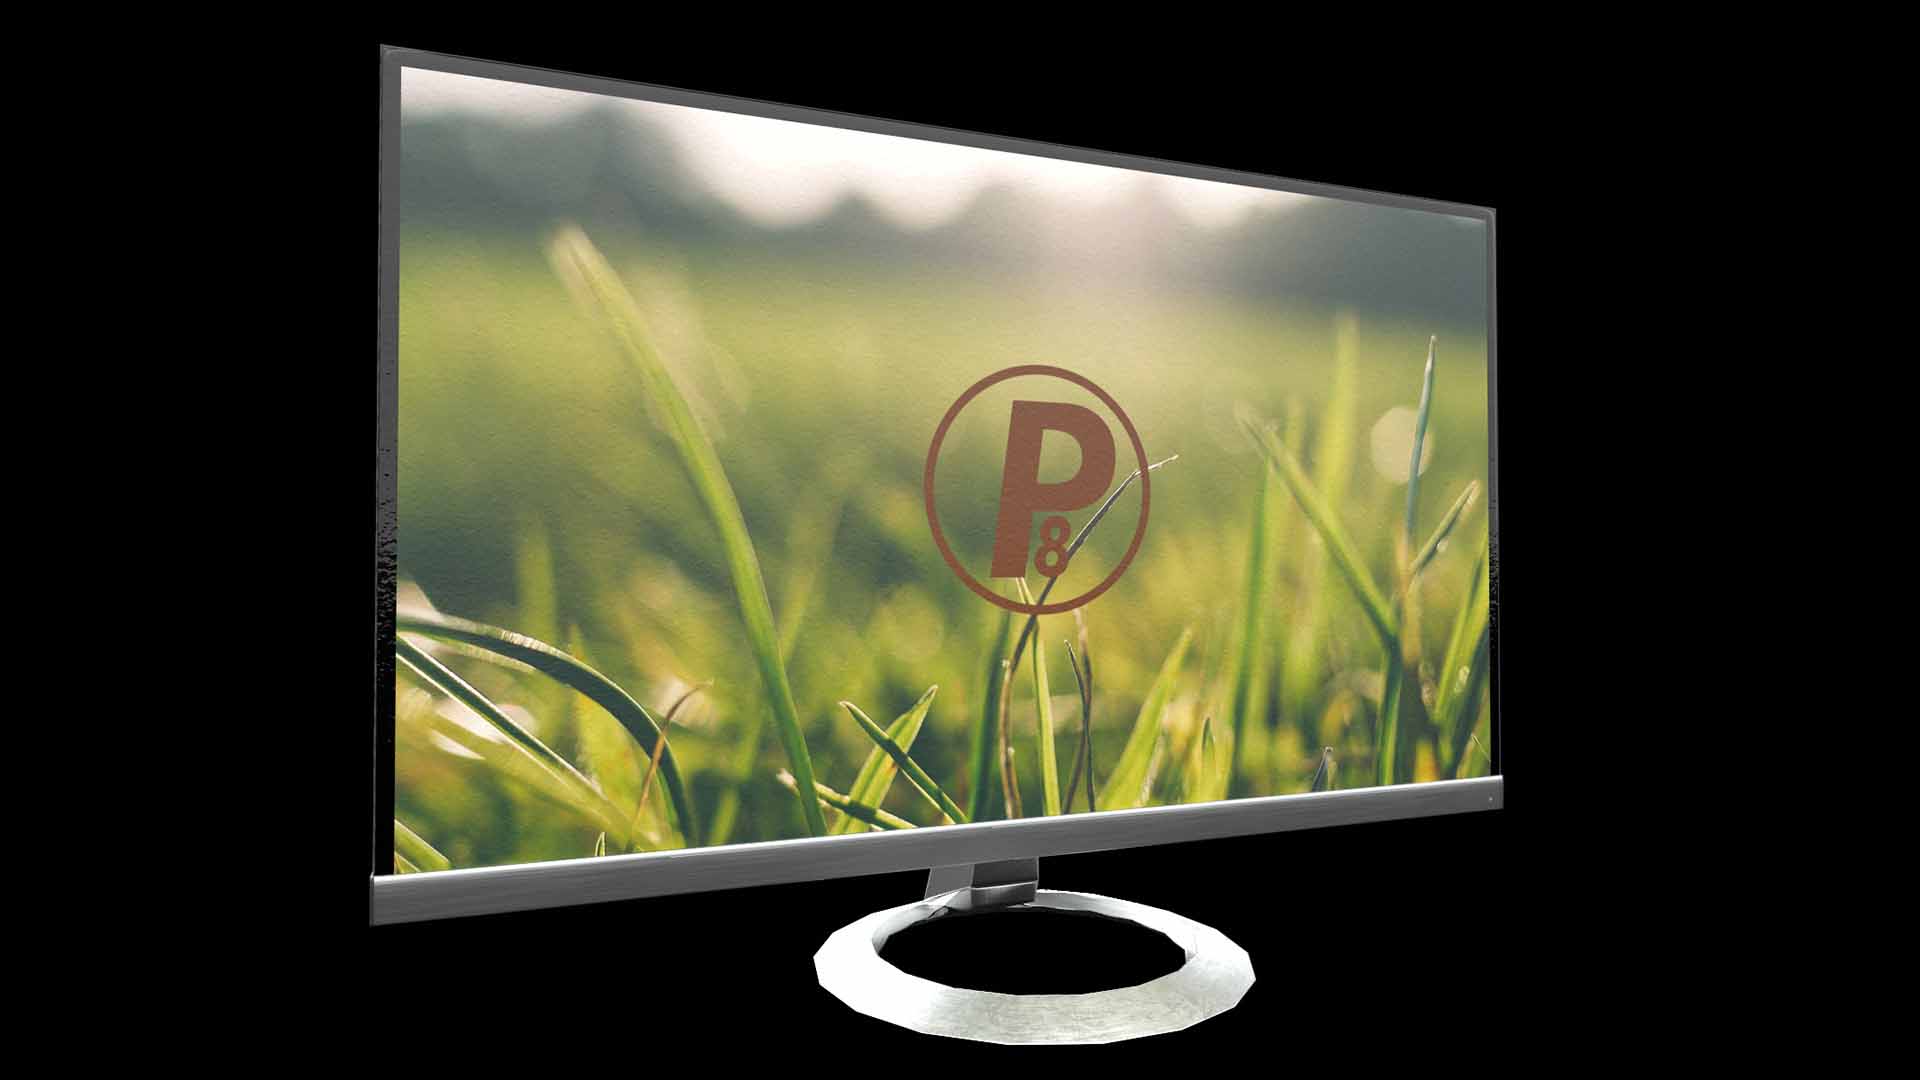 front-screen-monitor-tv-asus-fanart-3d-pixelion8